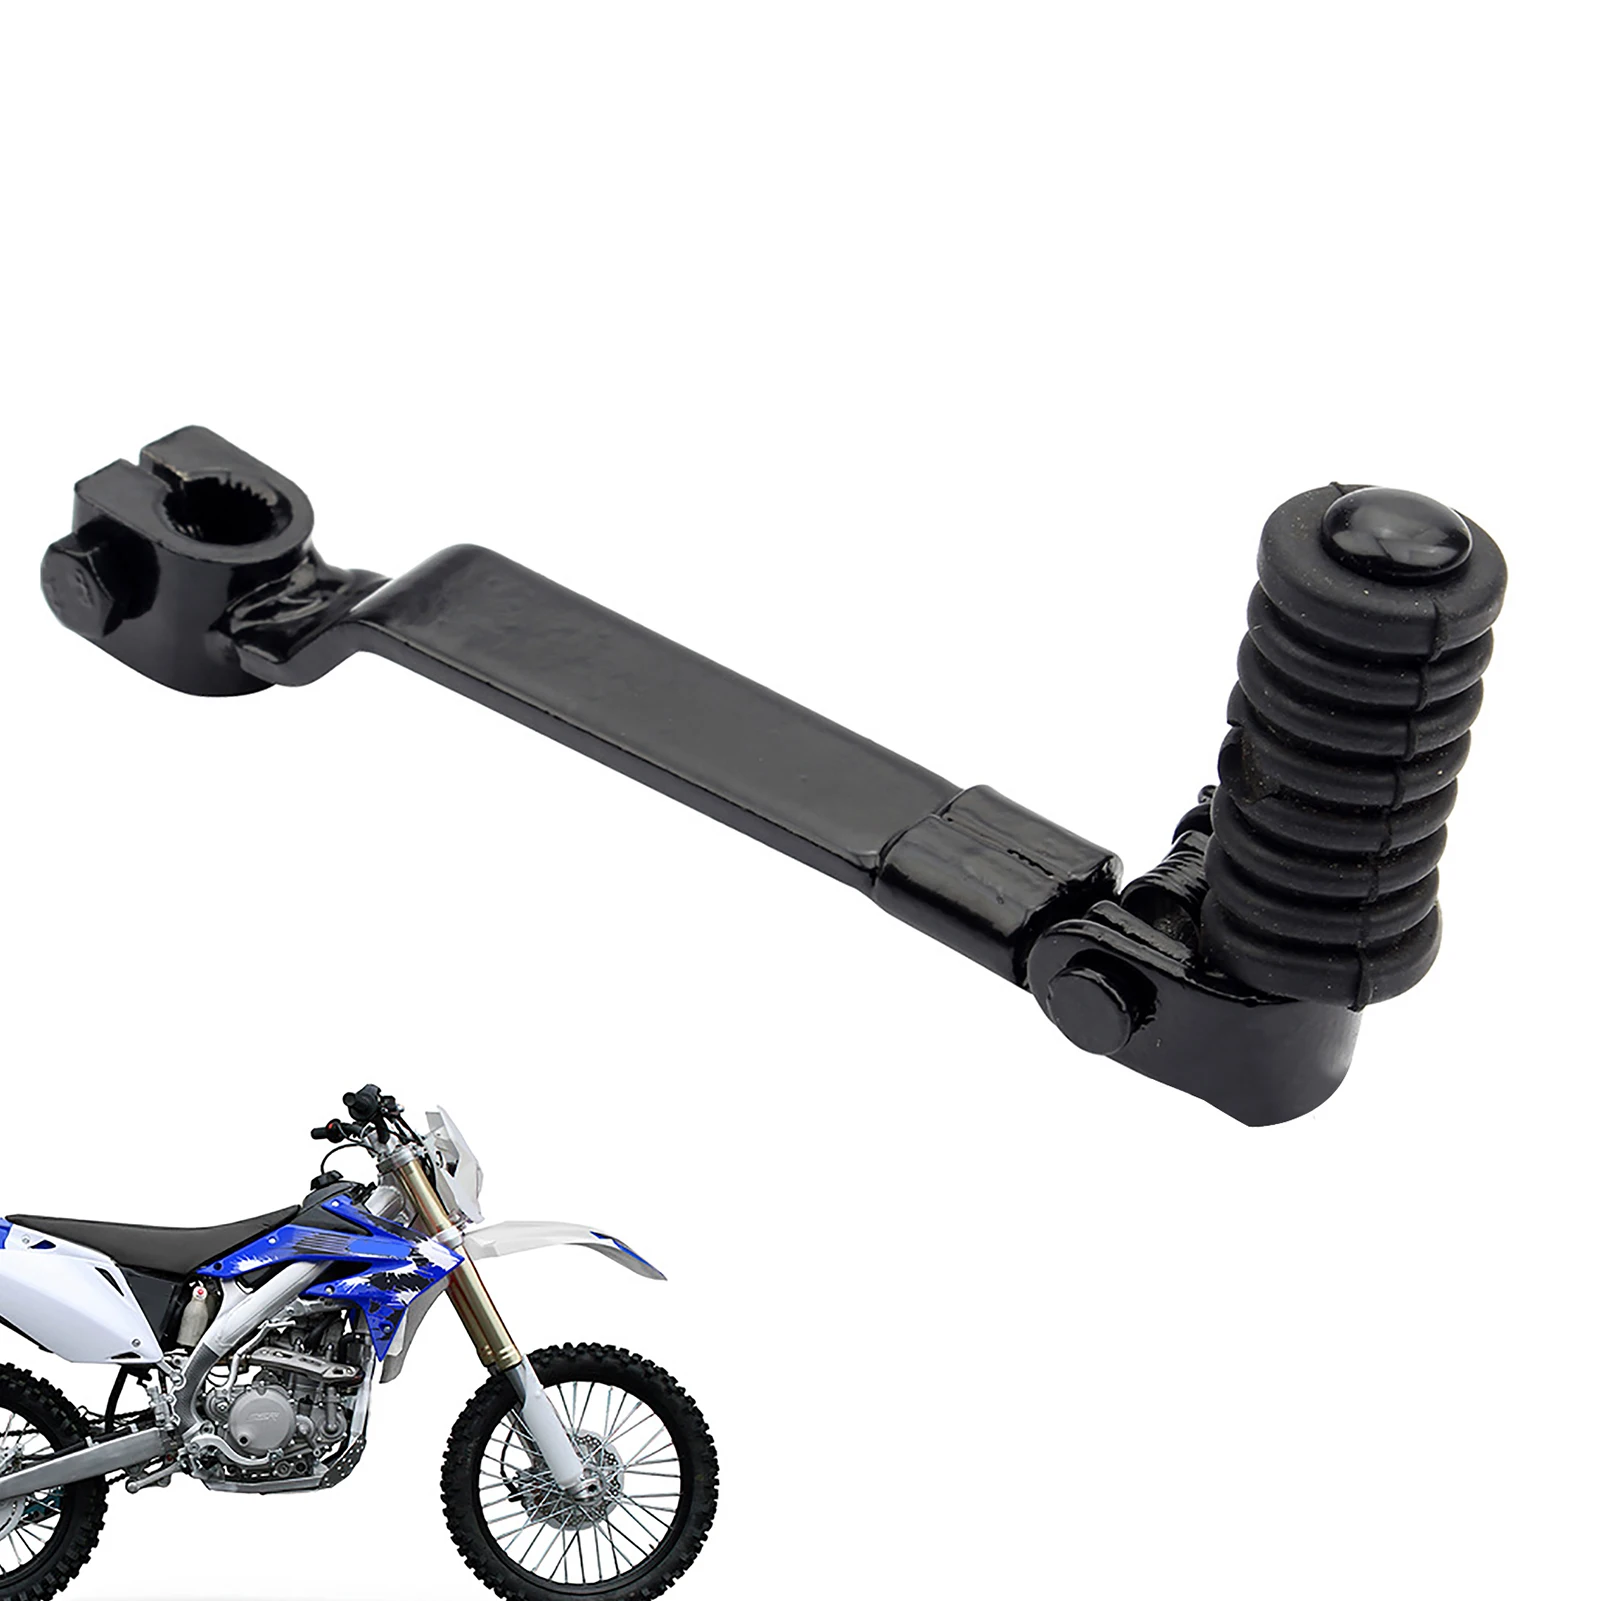 

Black Stainless Steel Folding Gear Shifter Shift Lever Dirt Pit Bike 50cc-125cc /CRF 50 Beach Bike Accessories